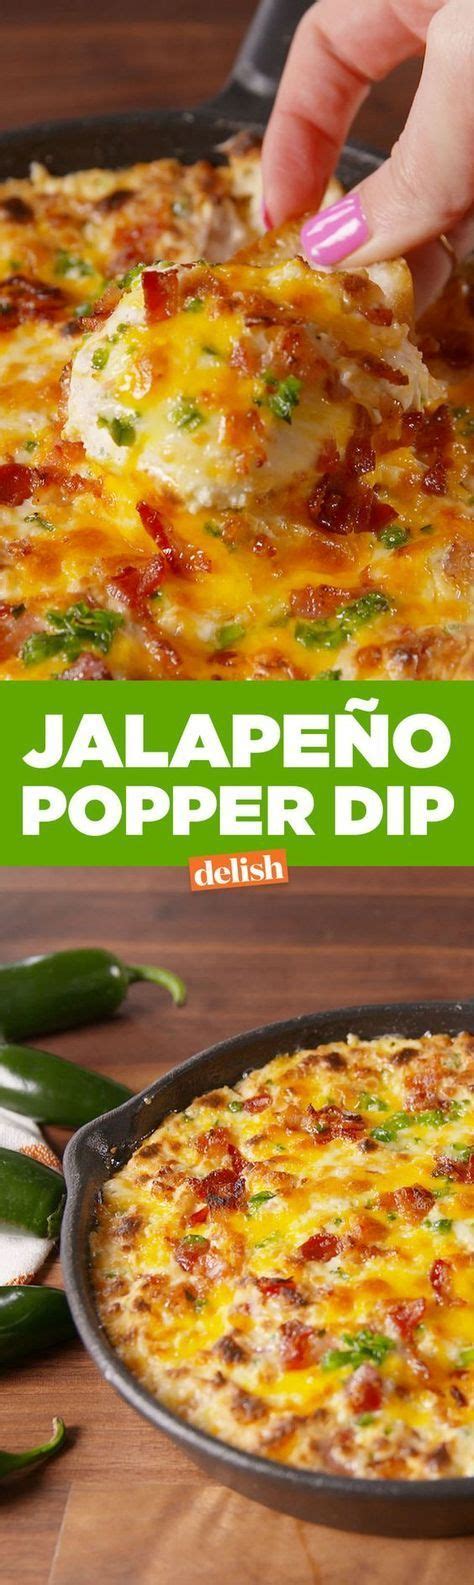 Jalapeño Popper Dip Recipe Appetizer Recipes Food Recipes Mexican